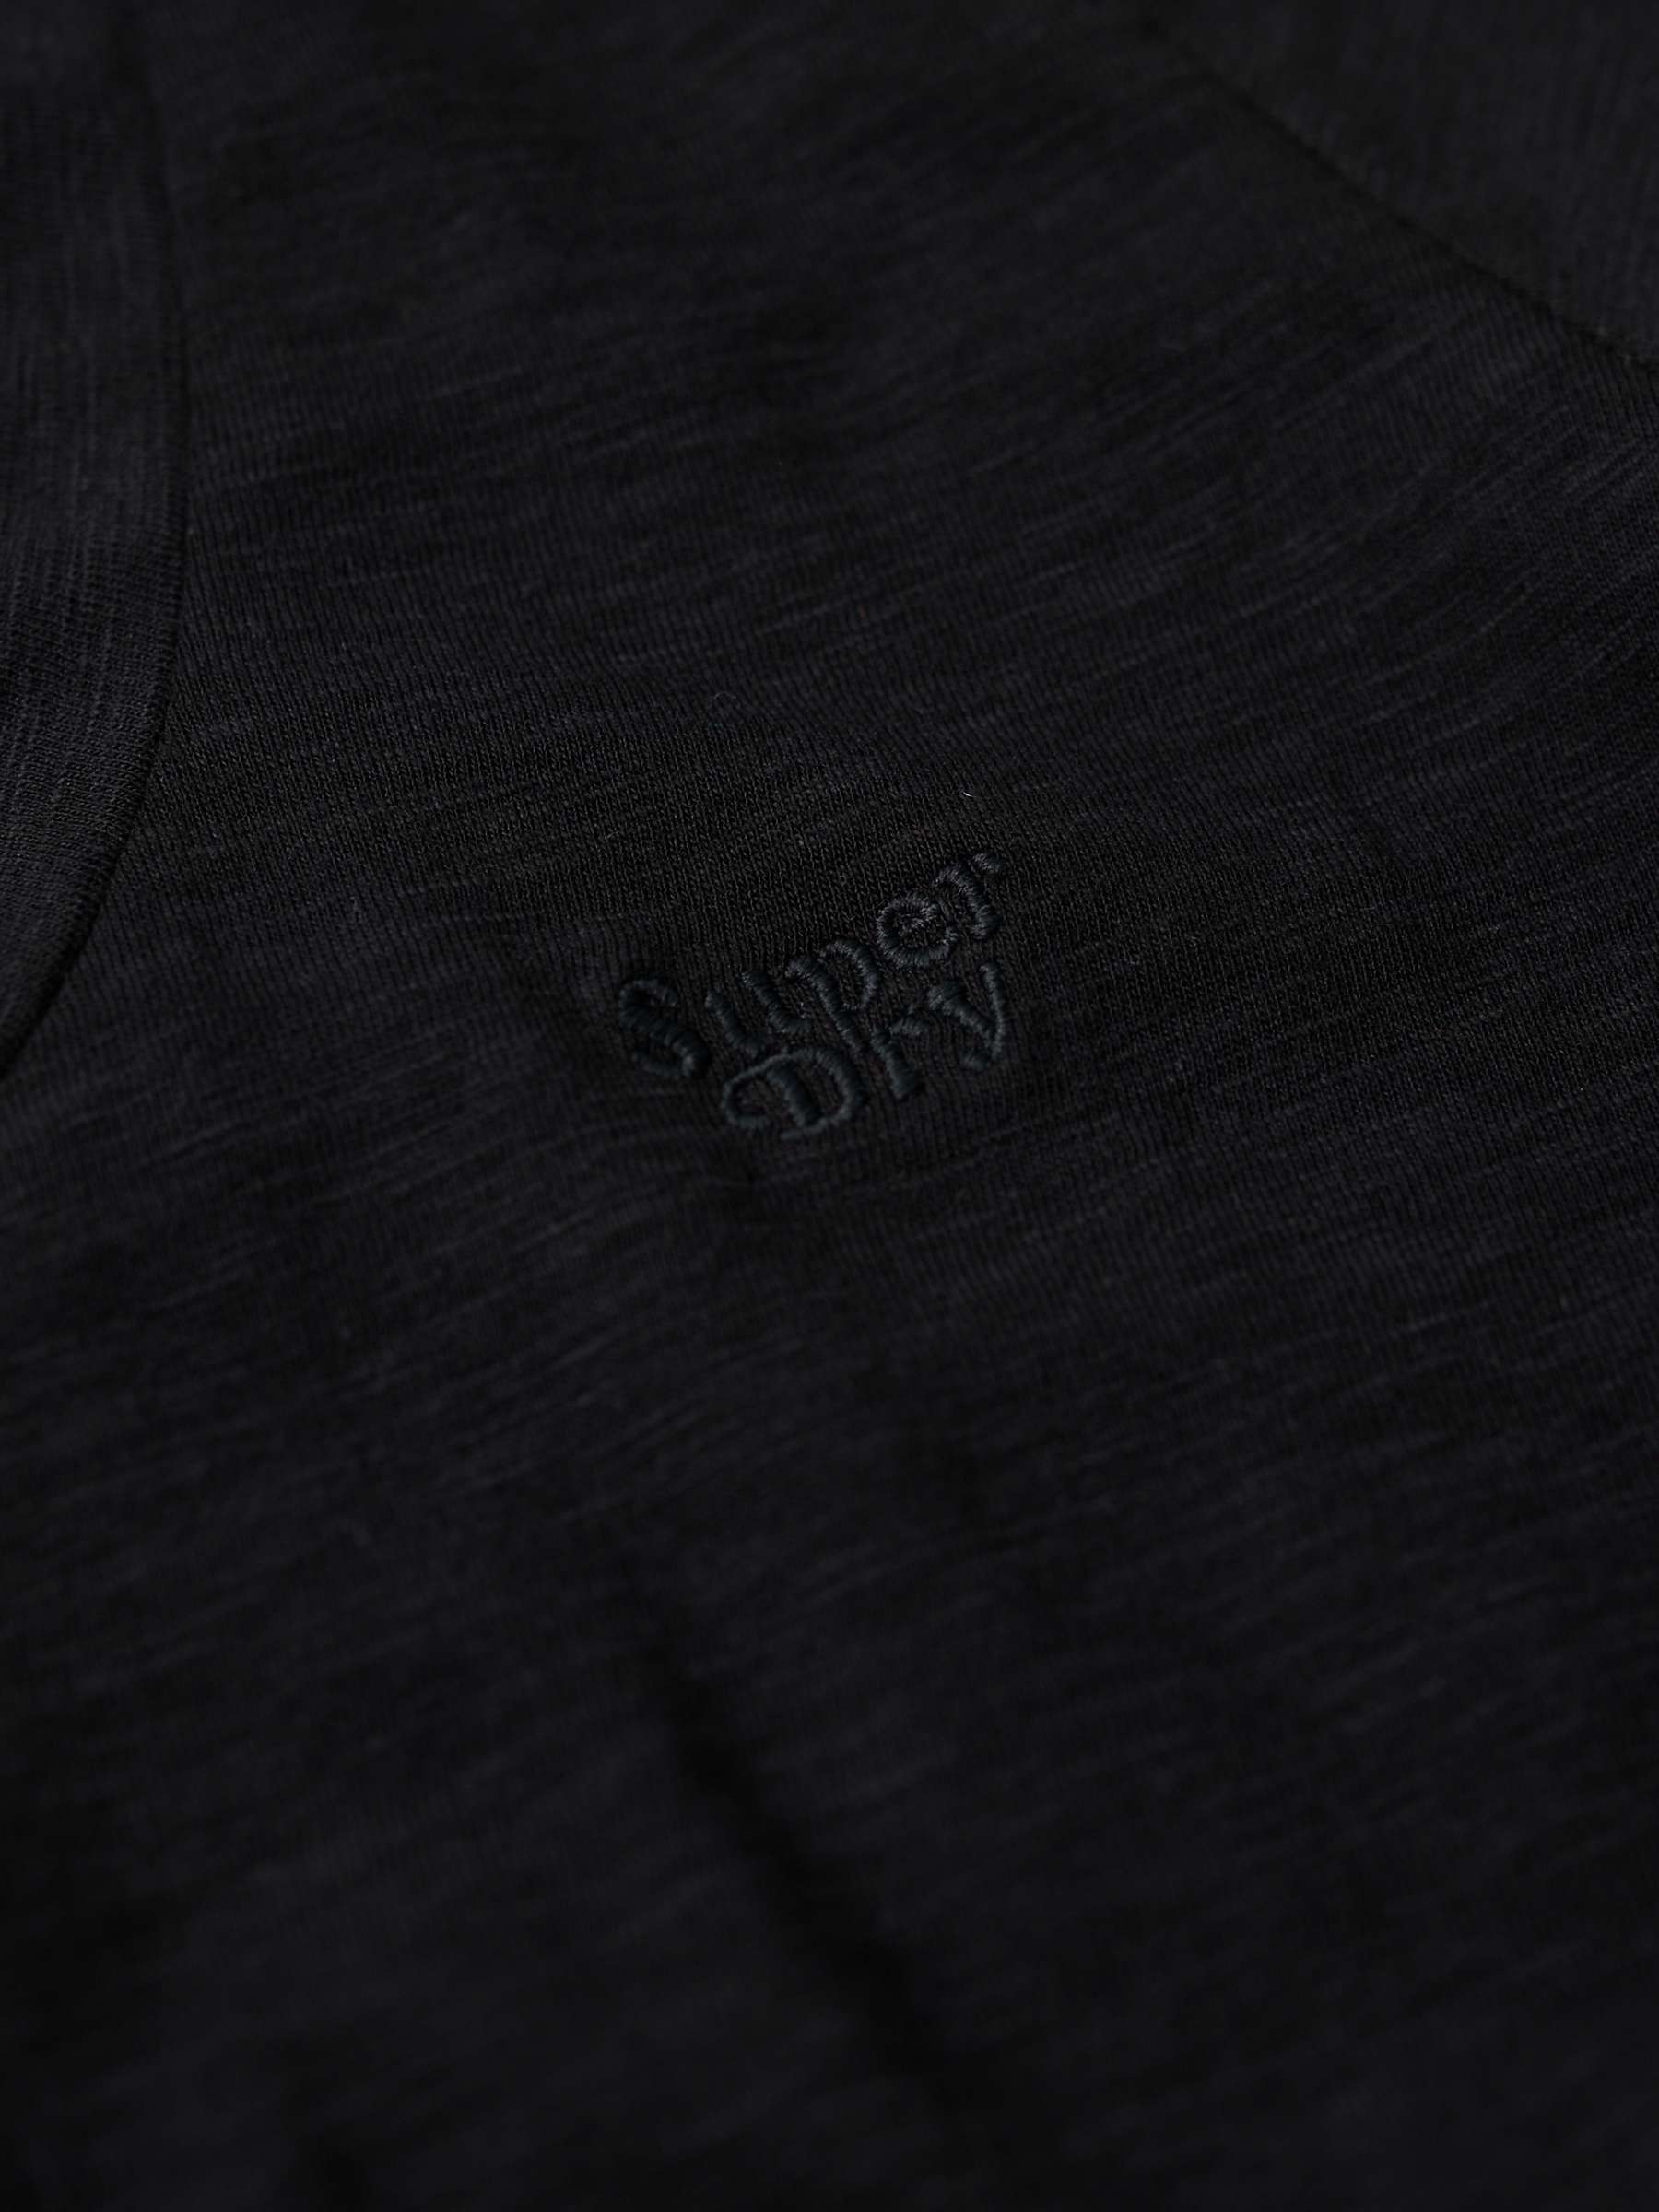 Buy Superdry Scoop Neck T-Shirt Online at johnlewis.com